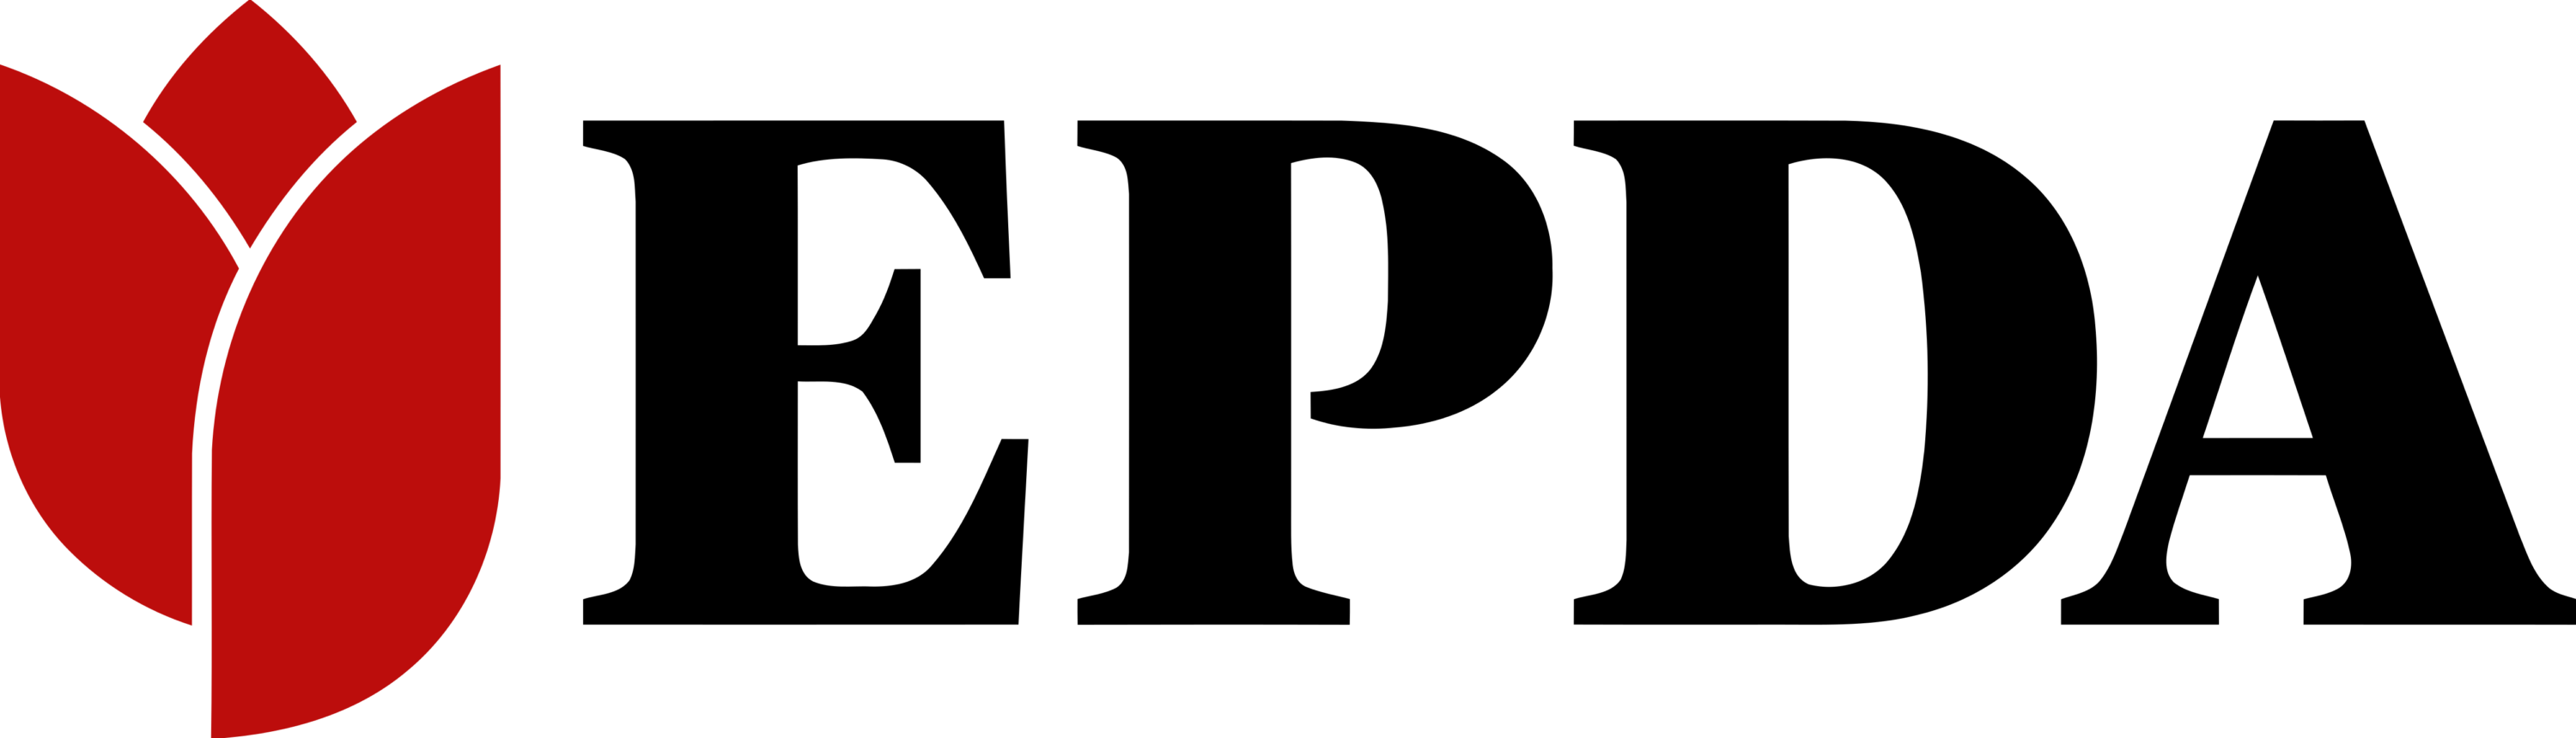 European Parkinson’s Disease Association Logo